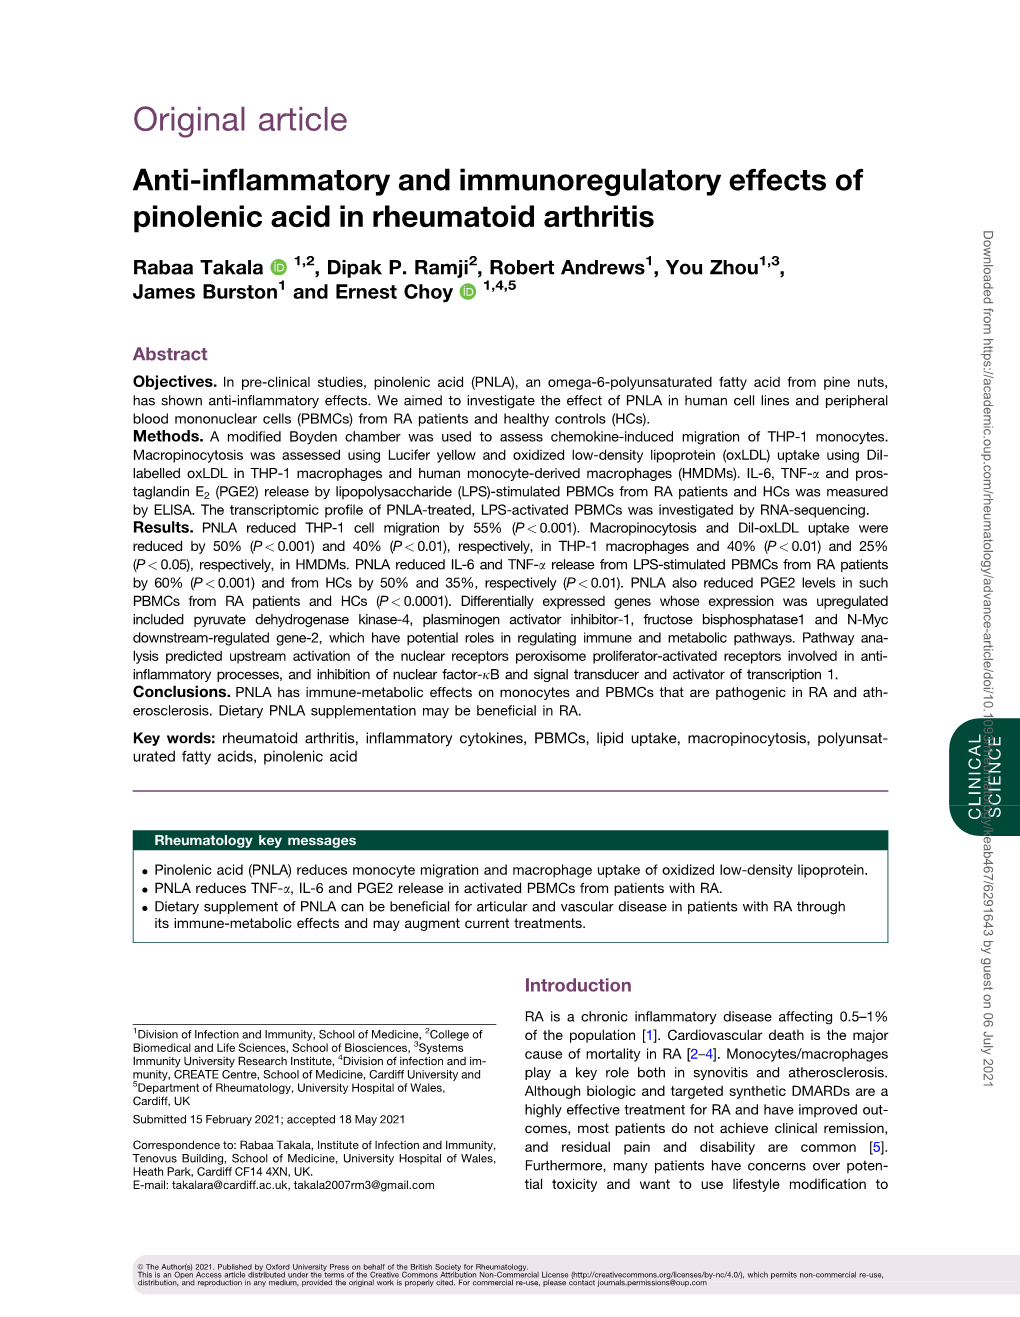 Original Article Anti-Inflammatory and Immunoregulatory Effects Of